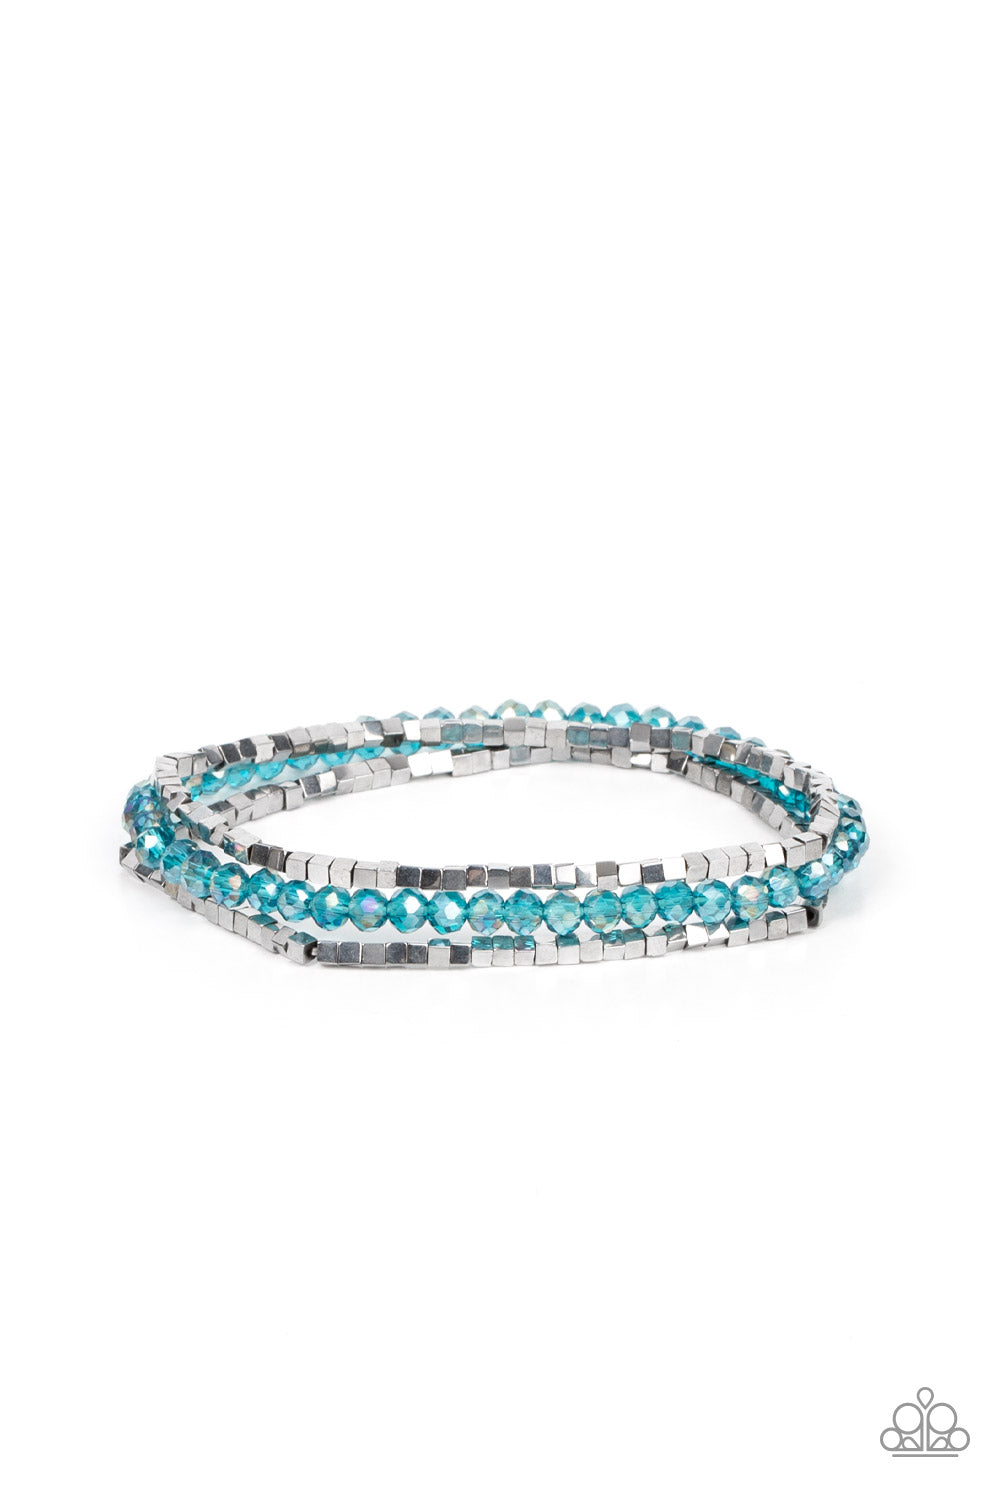 Just a Spritz -  Blue Iridescent Crystal Bead Bracelet - Paparazzi Accessories